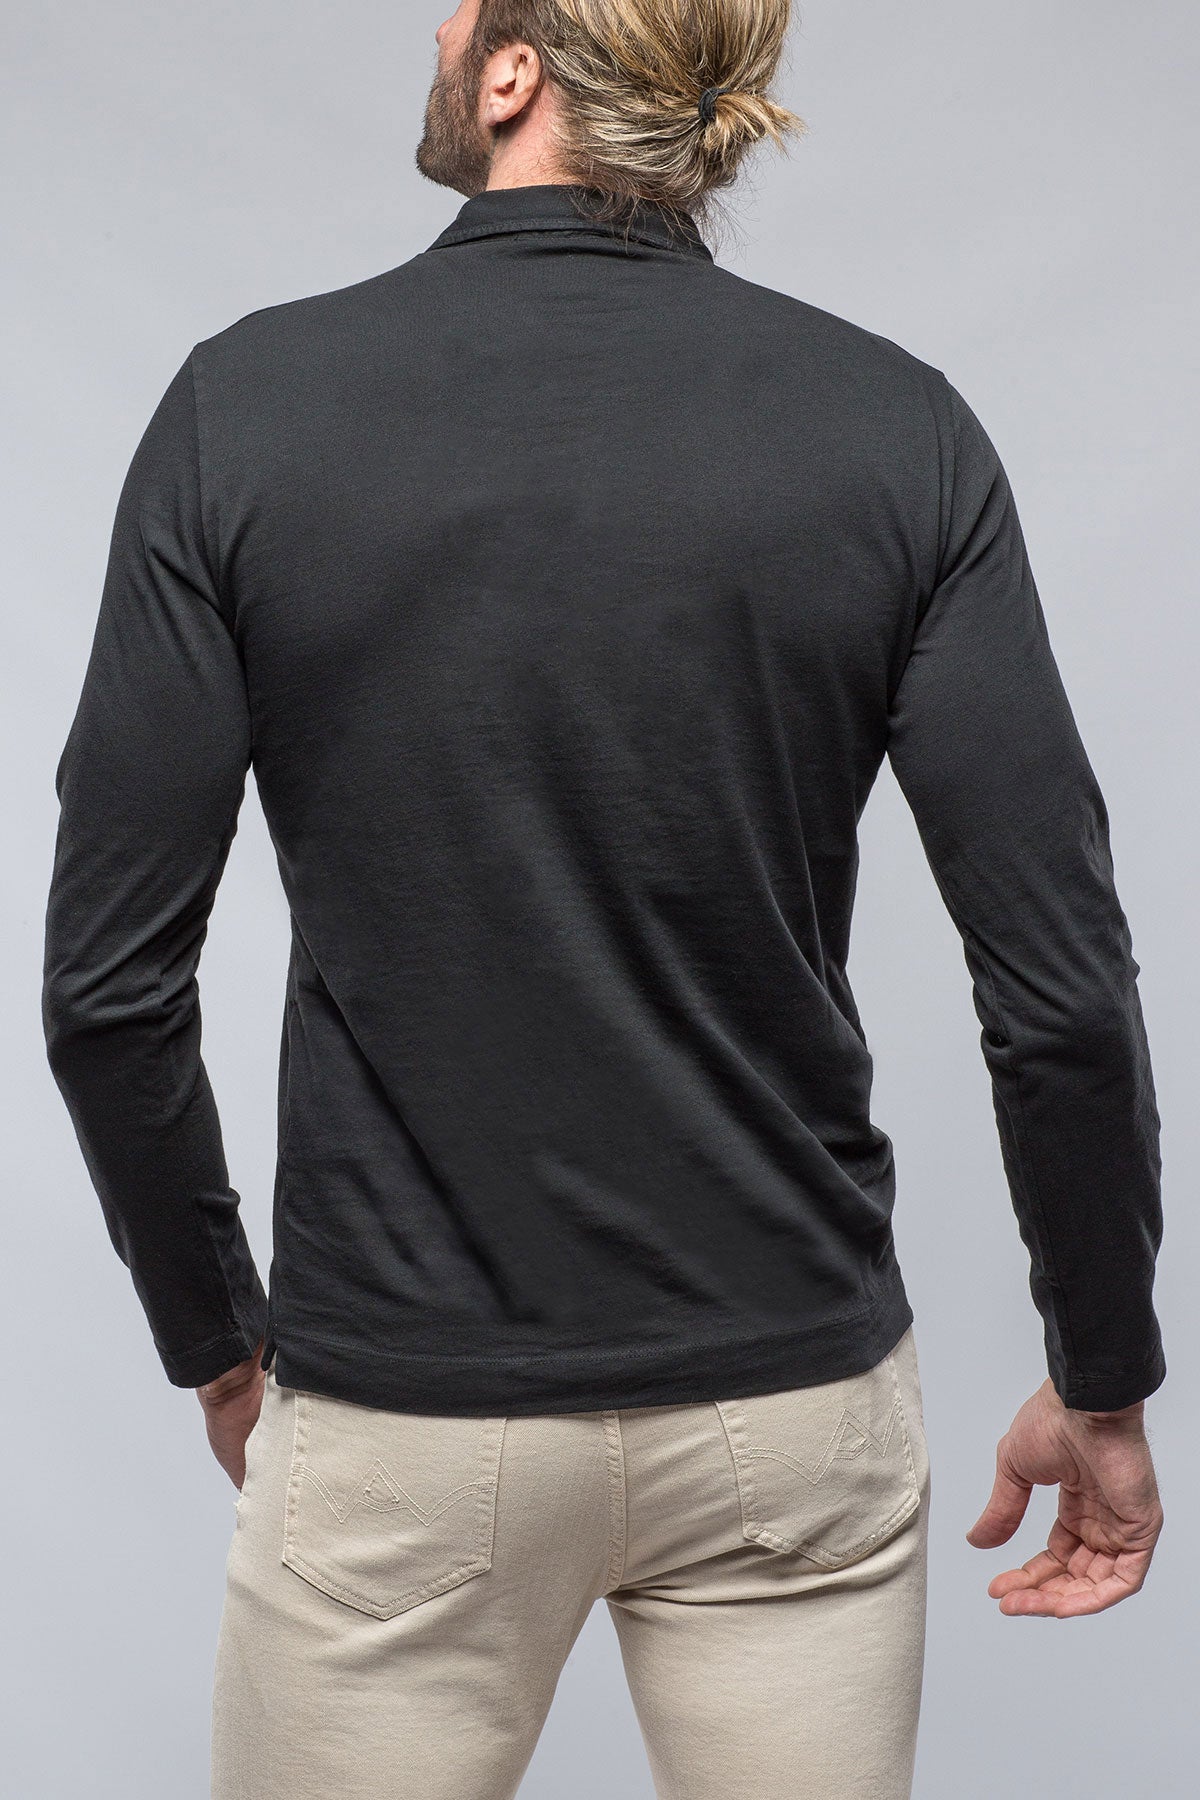 Torrance Long Sleeve Polo in Black | Mens - Shirts - Polos | Gimo's Cotton